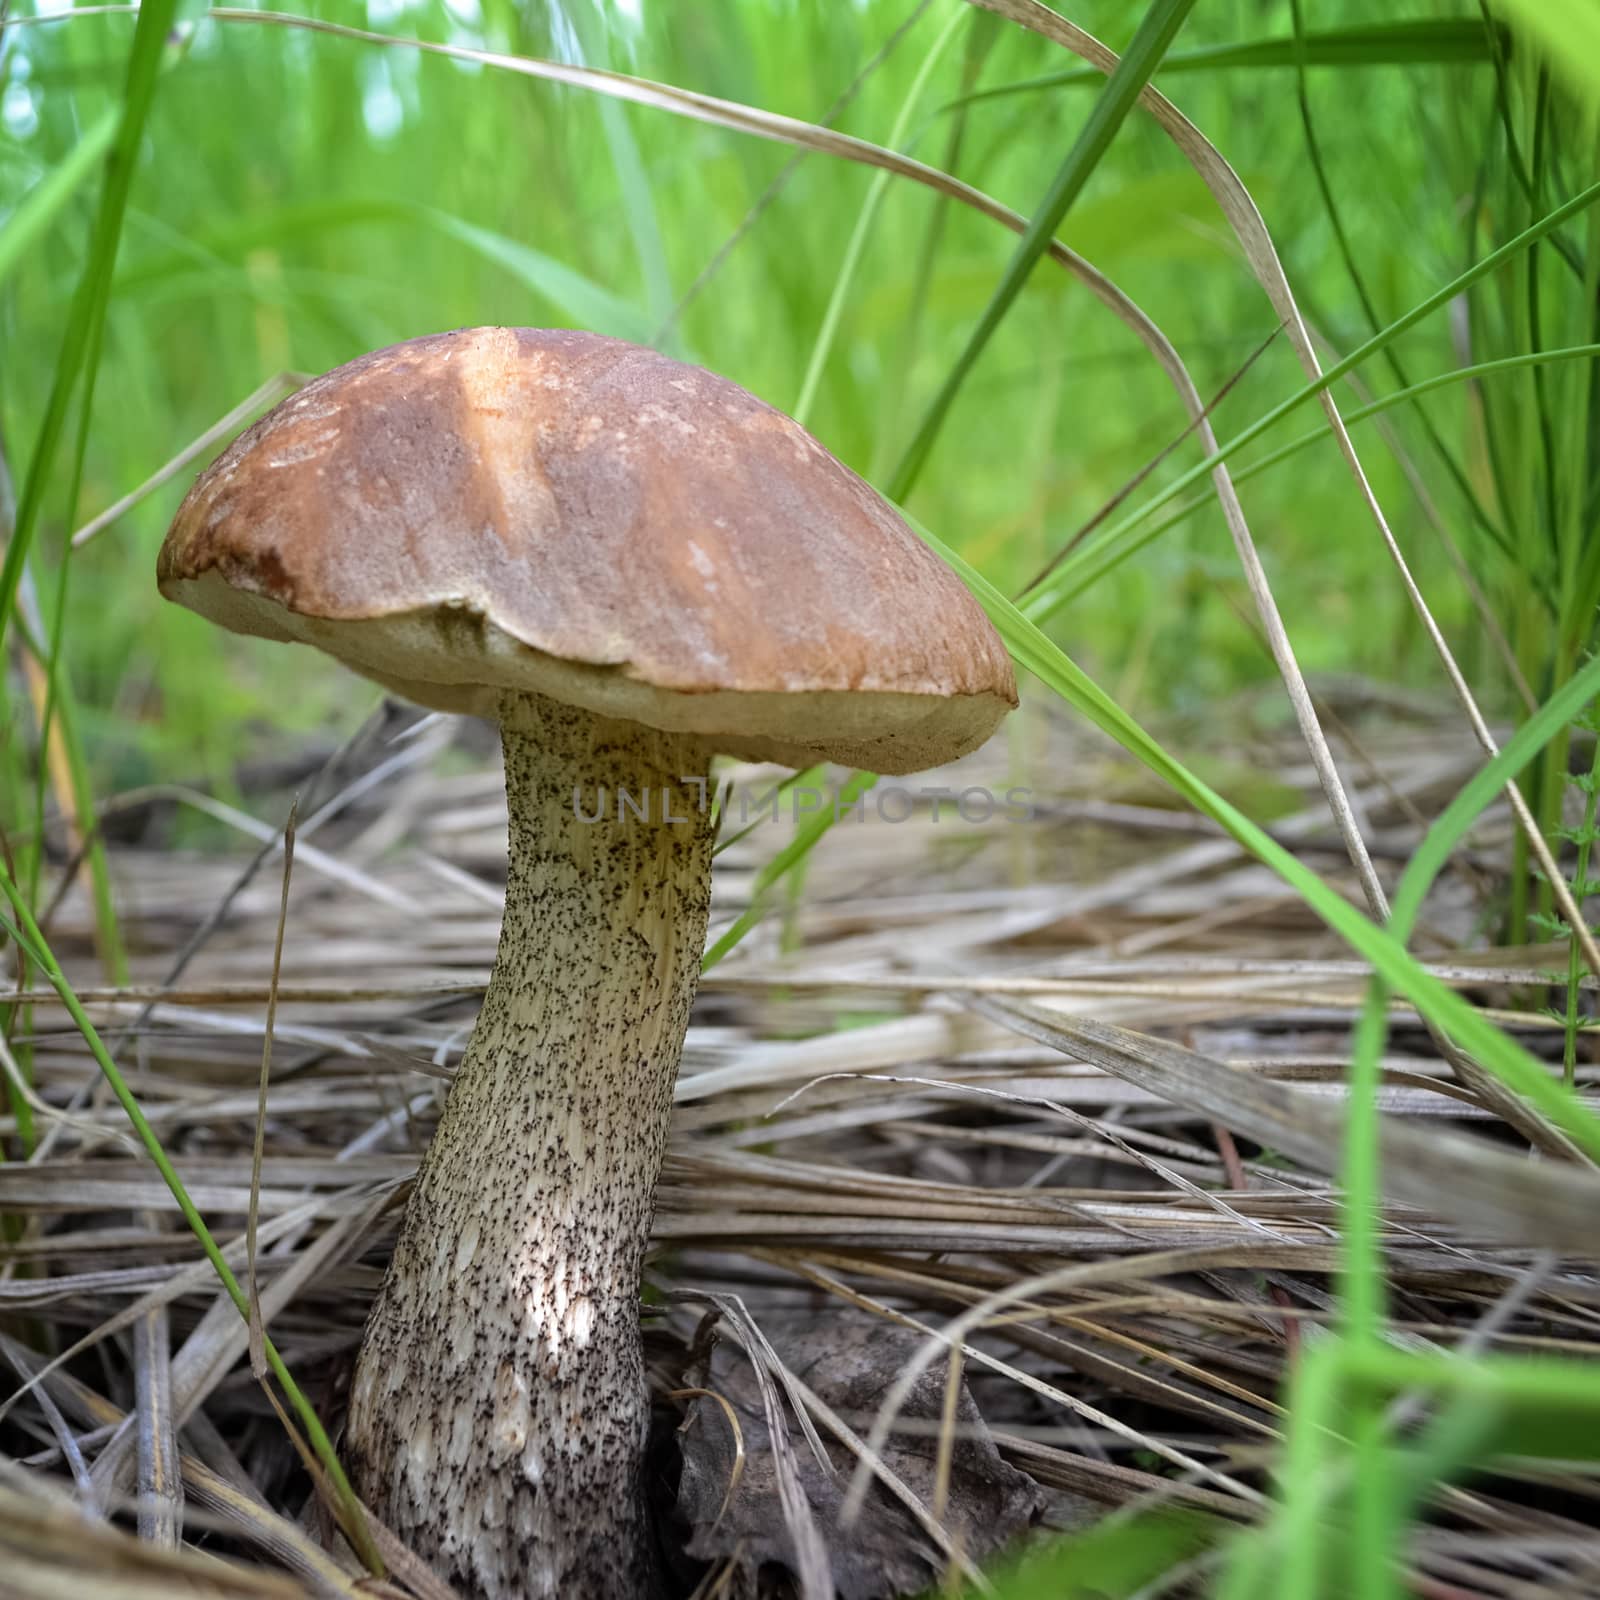 Boletus mushroom growing in the grass in the wild